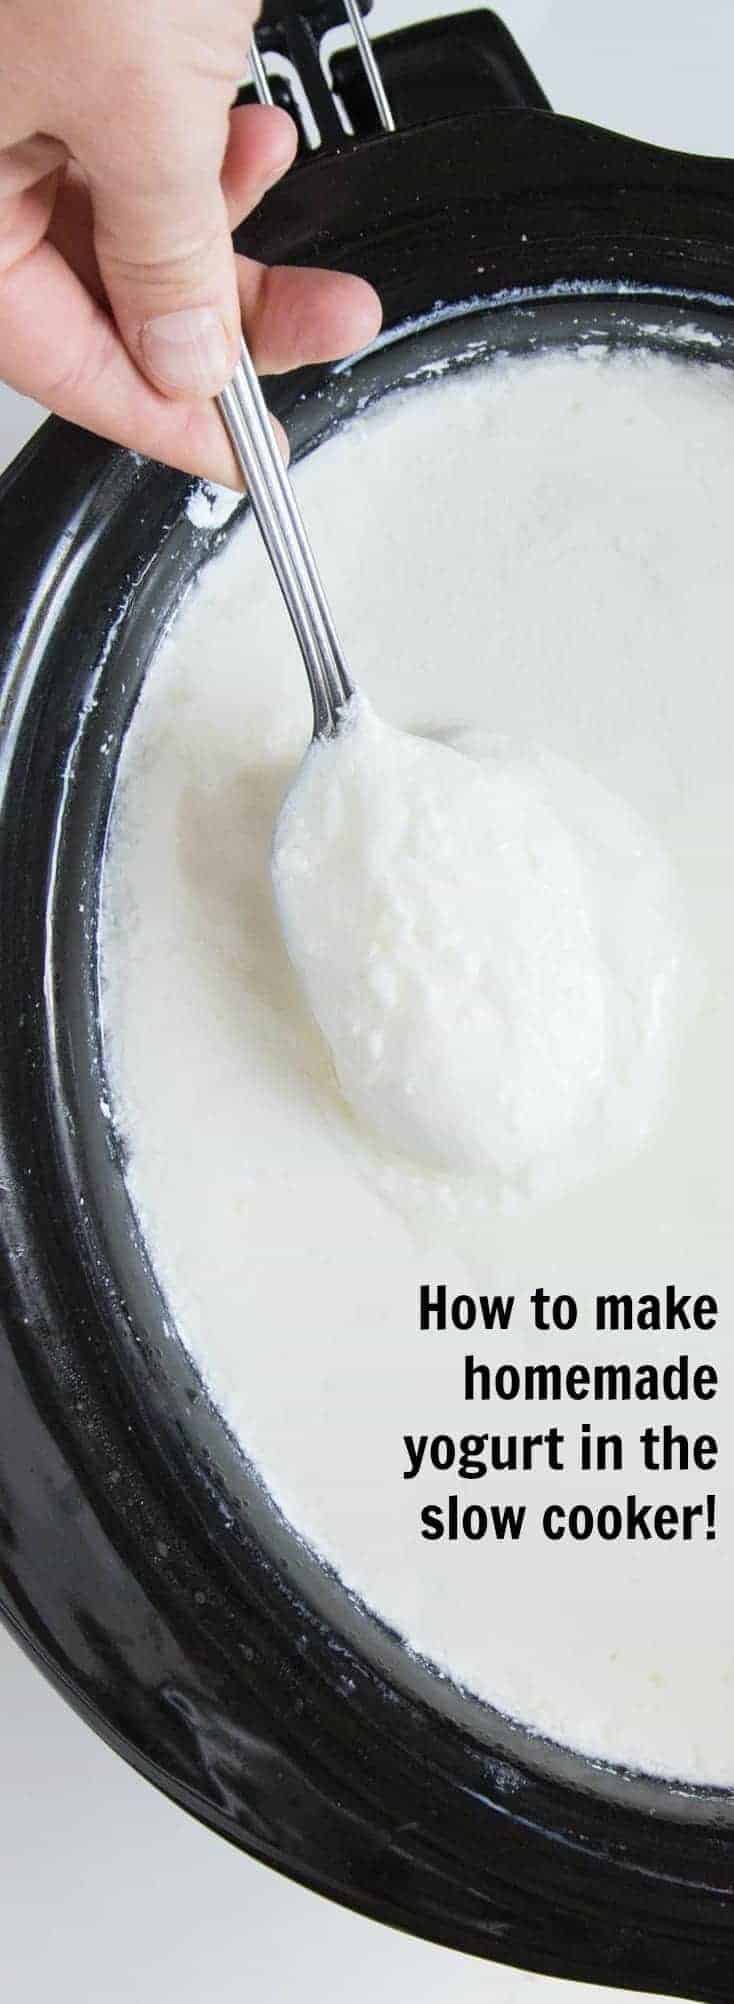 Slow cooker yogurt is an easy, healthy and inexpensive way to make homemade yogurt without a yogurt maker. 